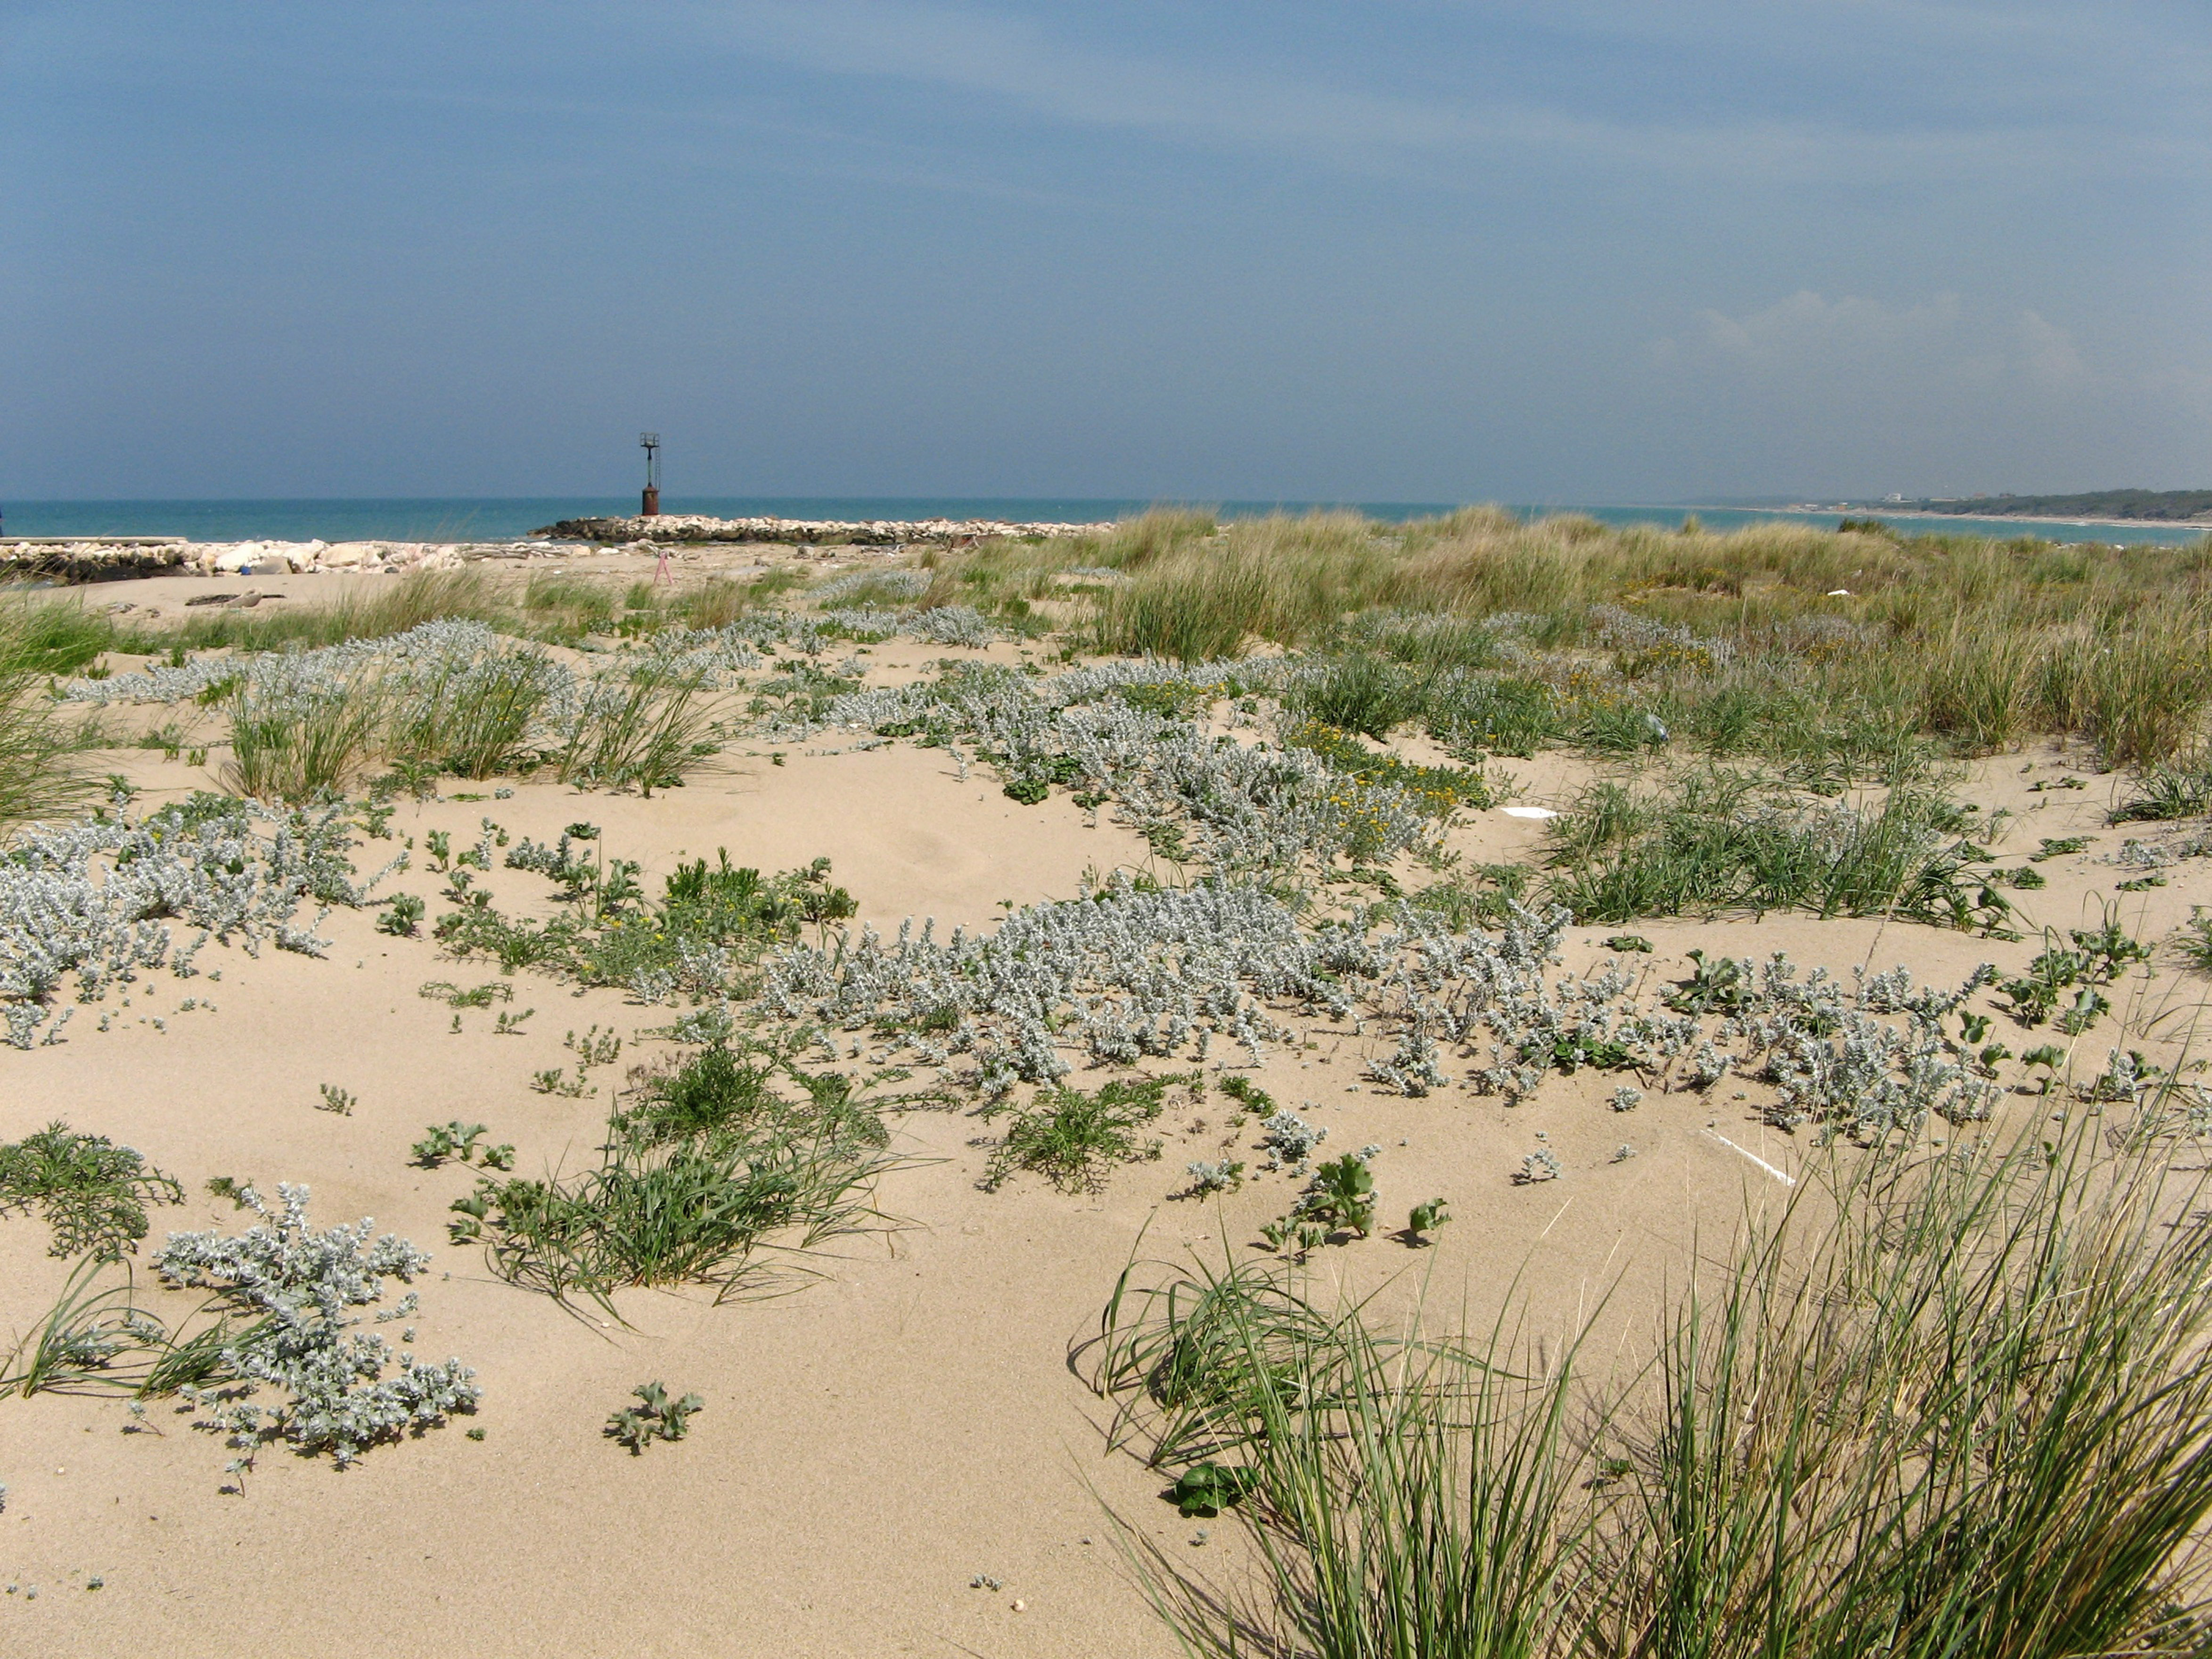 Embryonic shifting dunes (EU Habitats 2110 and 2120) characterizing the Foce Saccione - Bonifica Ramitelli eLTER Site. Species in the image: Elymus farctus, Ammophila arenaria, Achillea maritima, Calystegia soldanella.